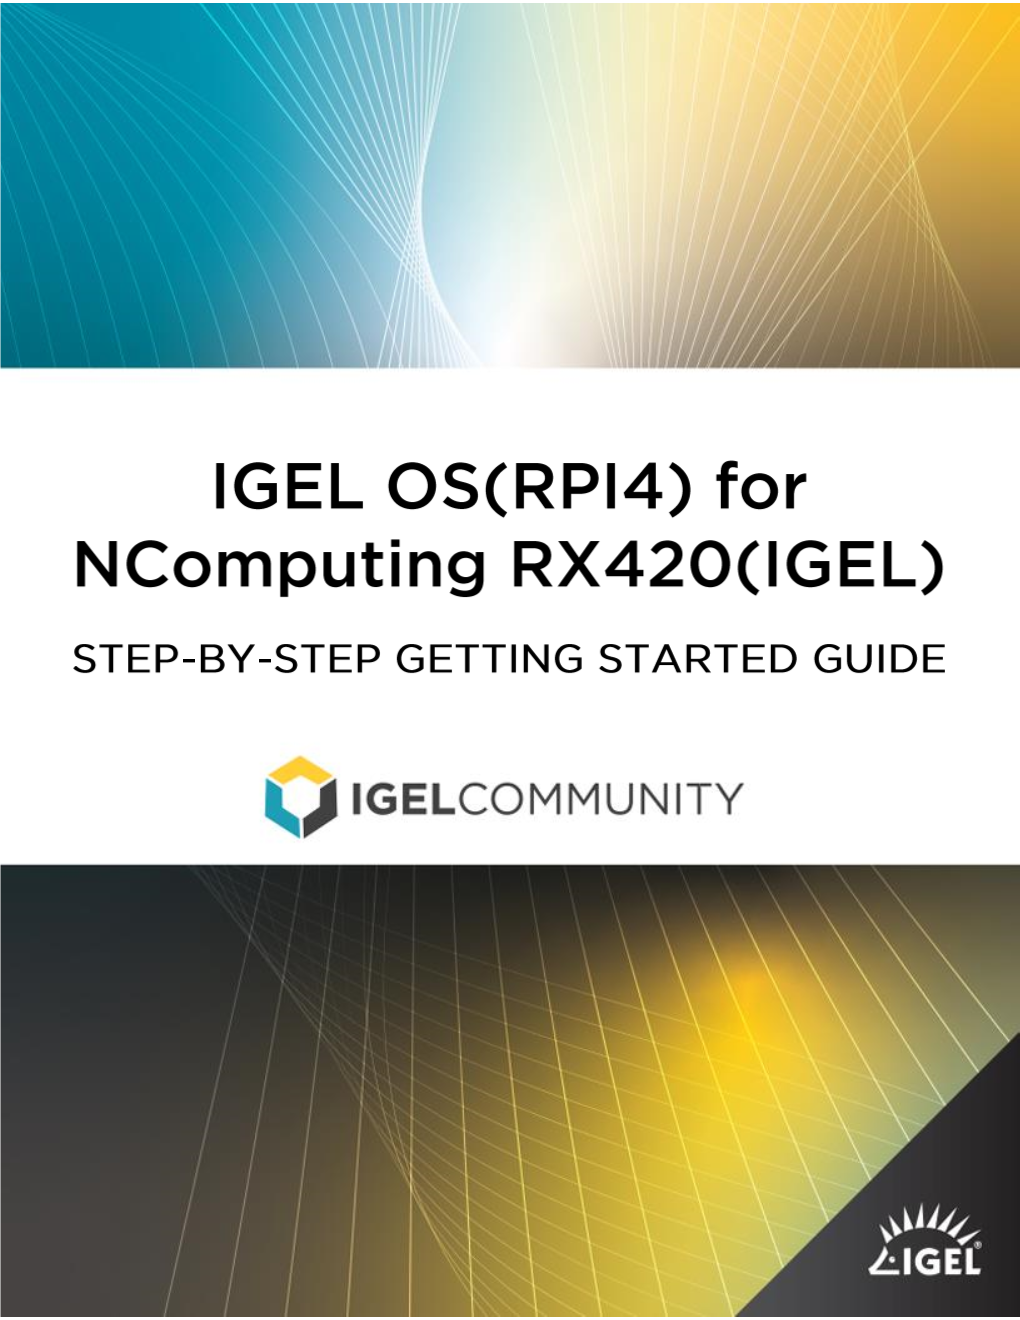 IGEL OS(RPI4) for Ncomputing RX420(IGEL) Getting Started Guide